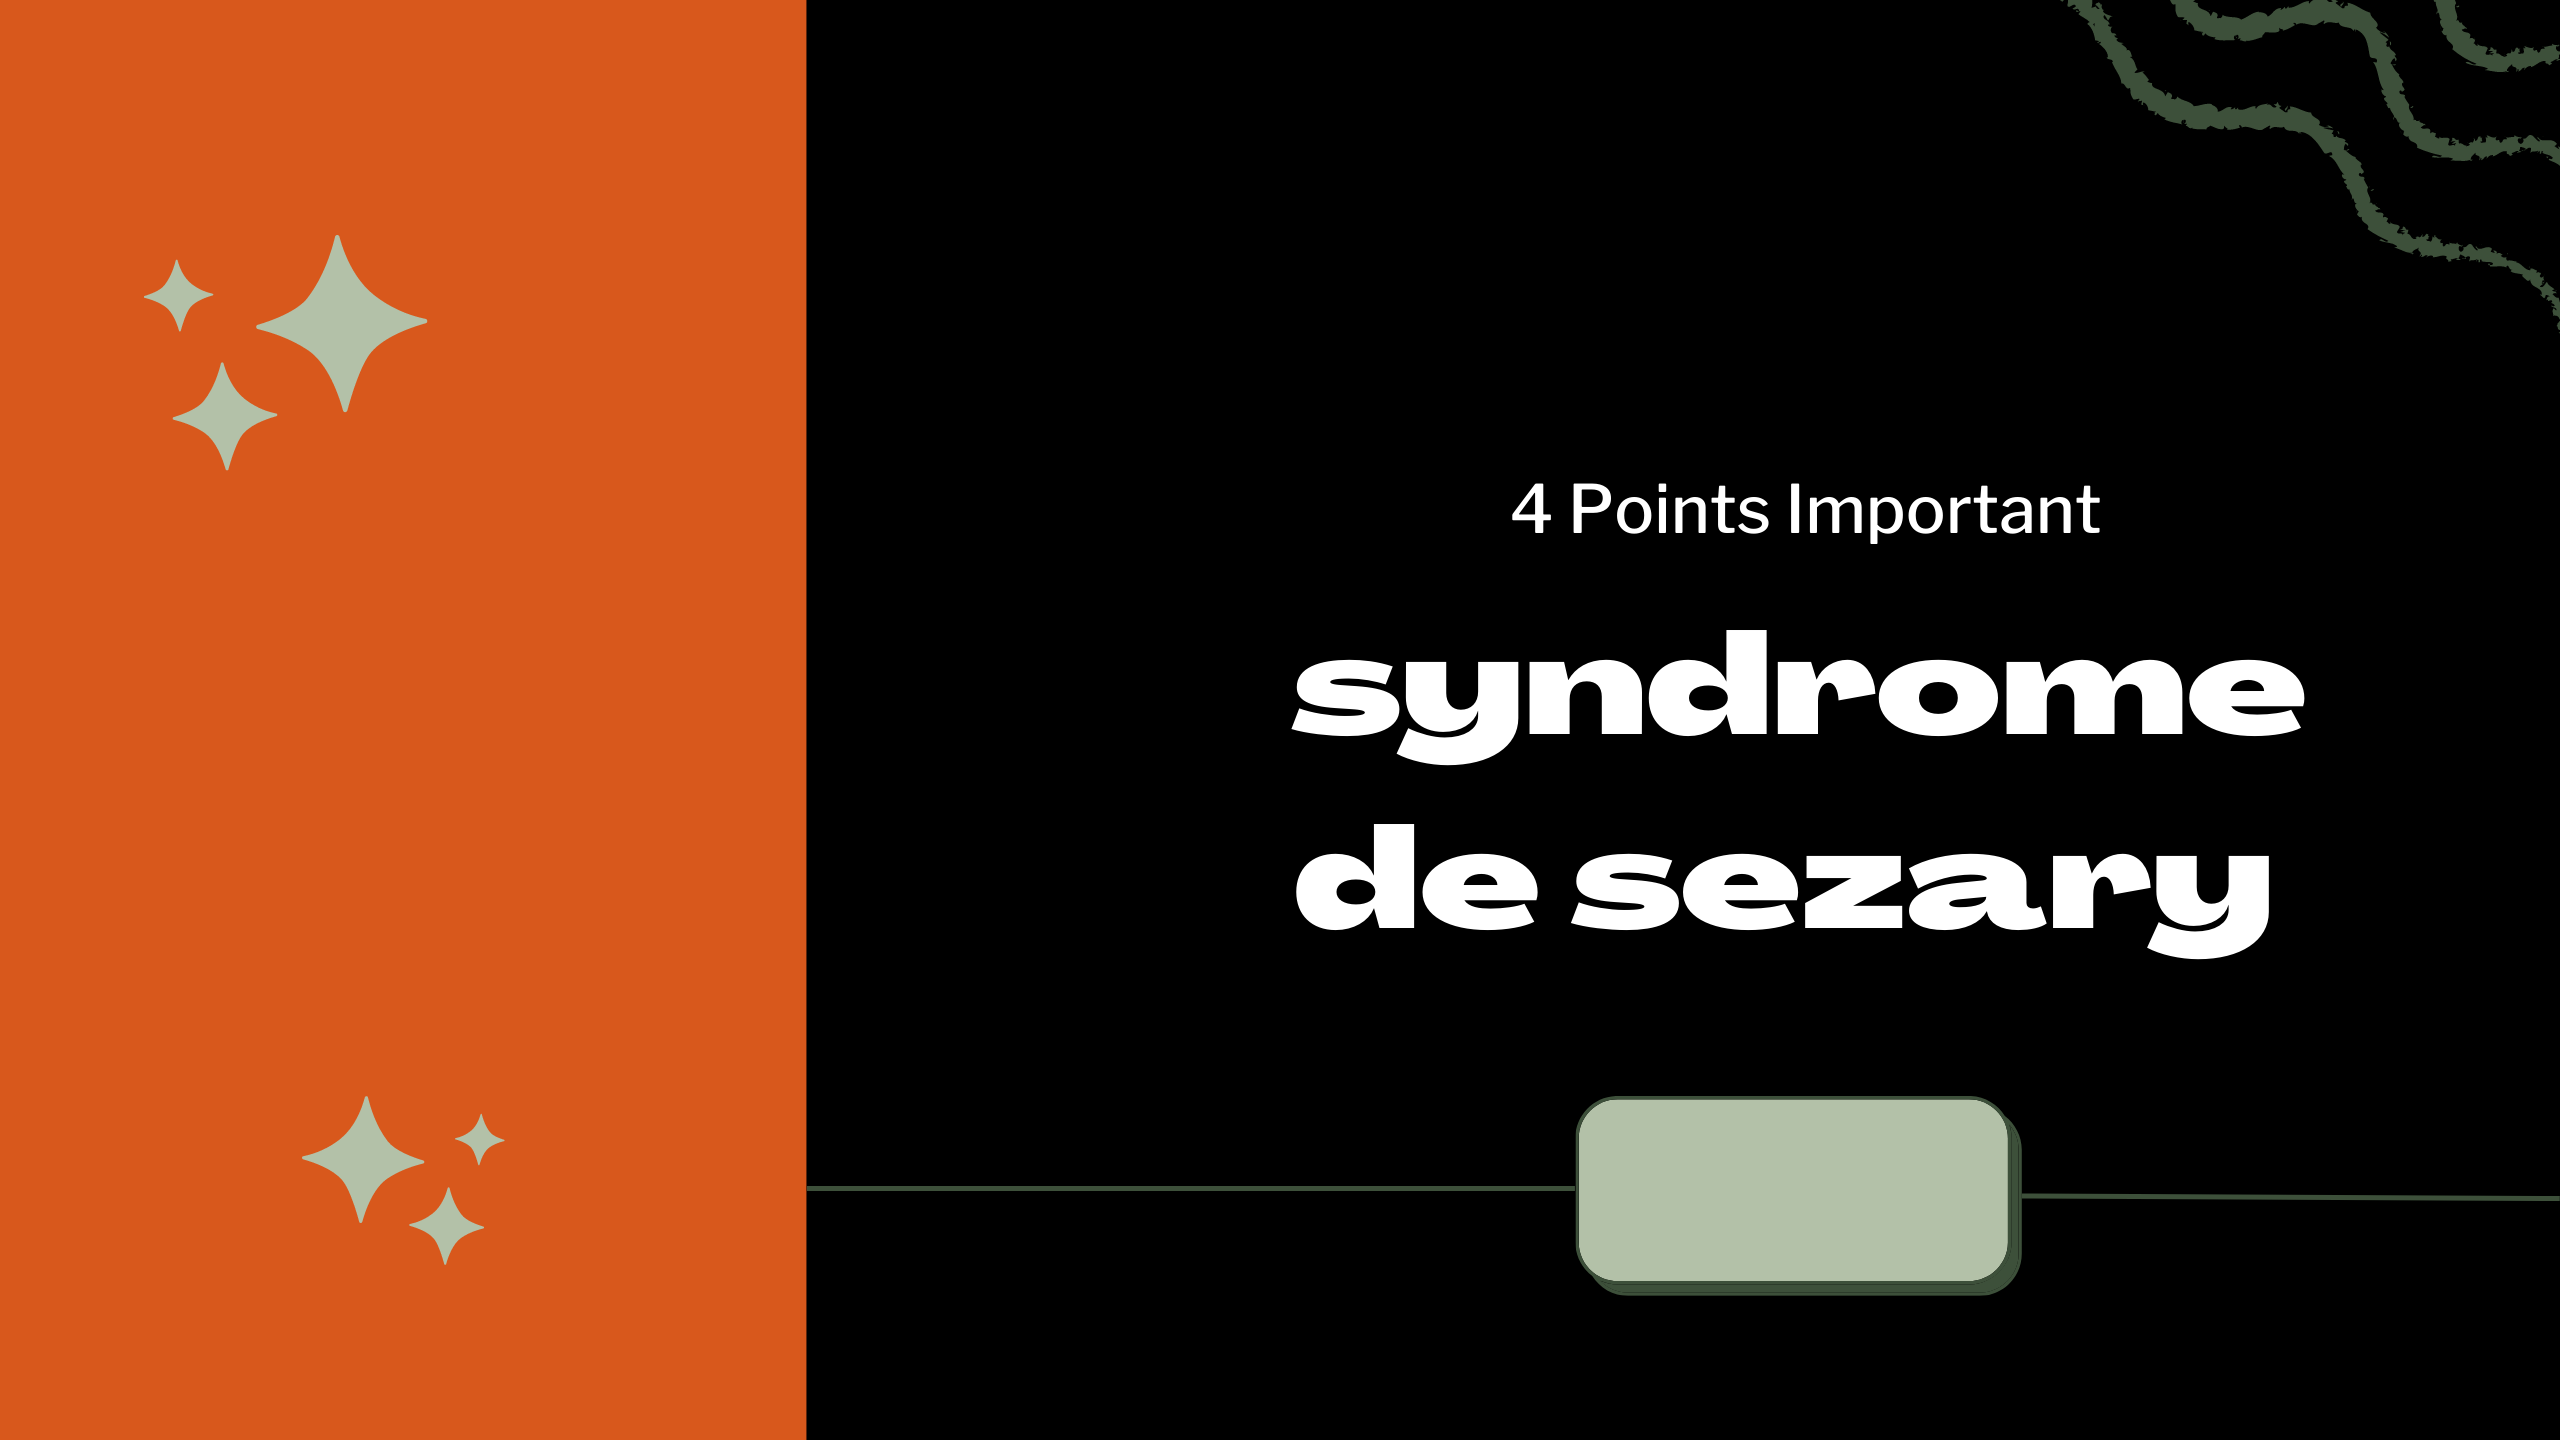 syndrome de sezary | 4 Points Important